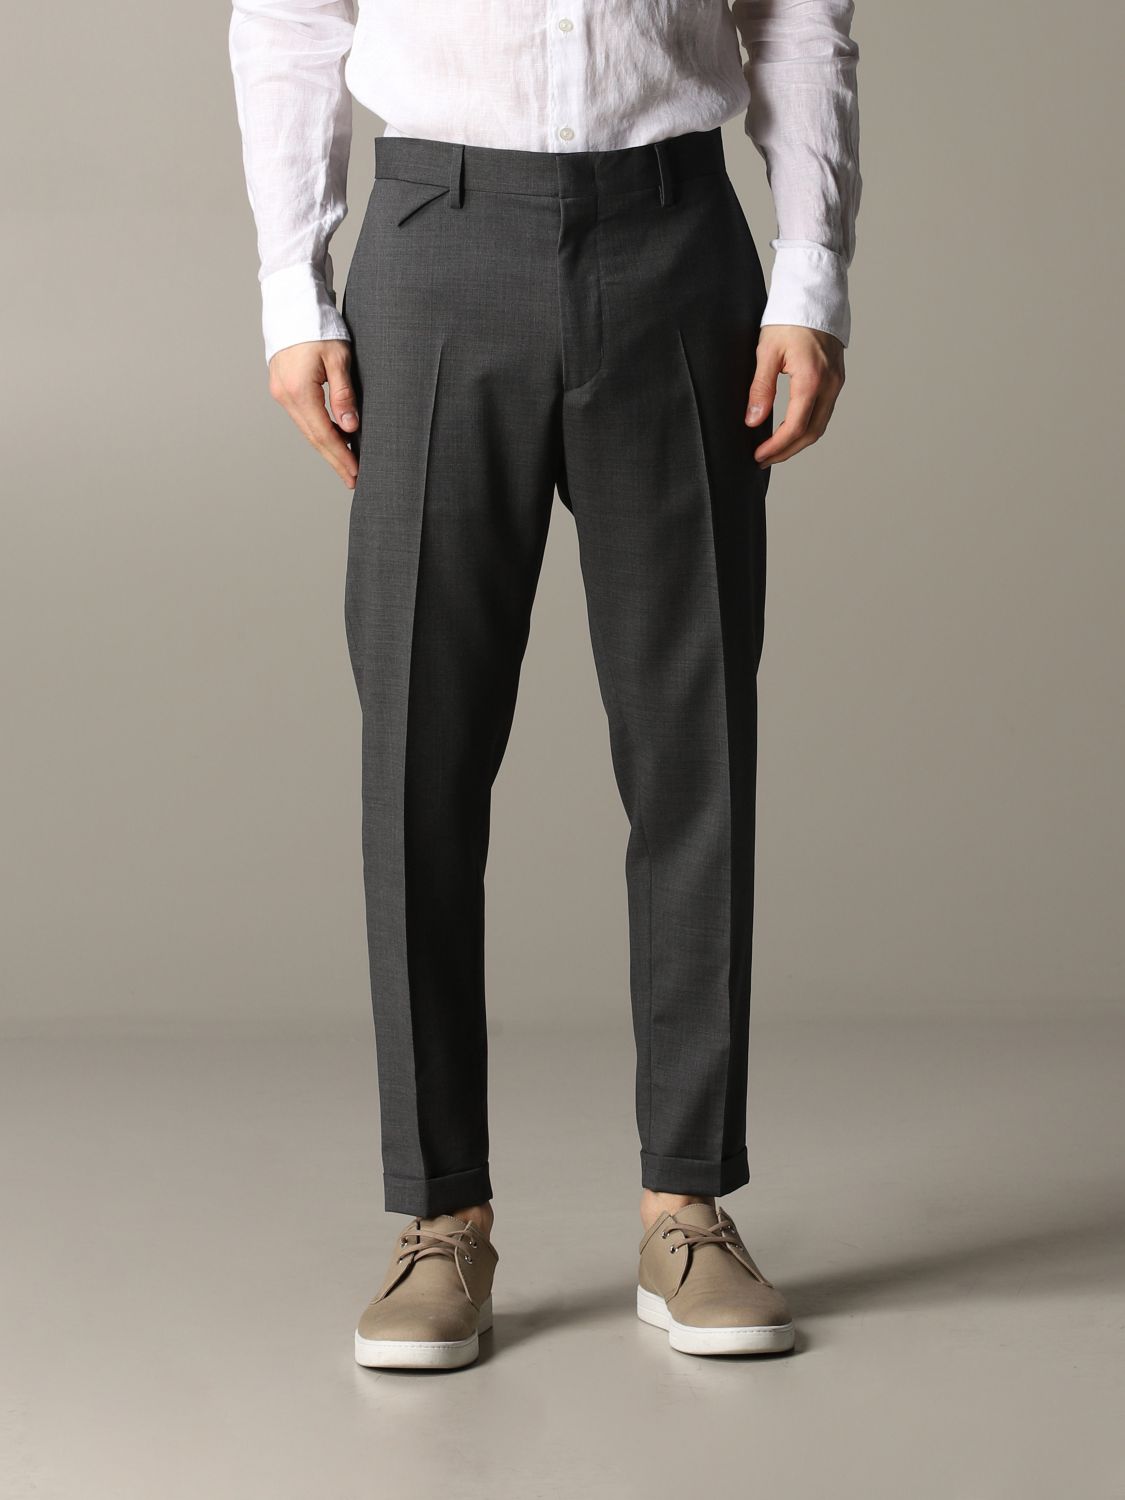 Low Brand Outlet: Pants men | Pants Low Brand Men Grey | Pants Low ...